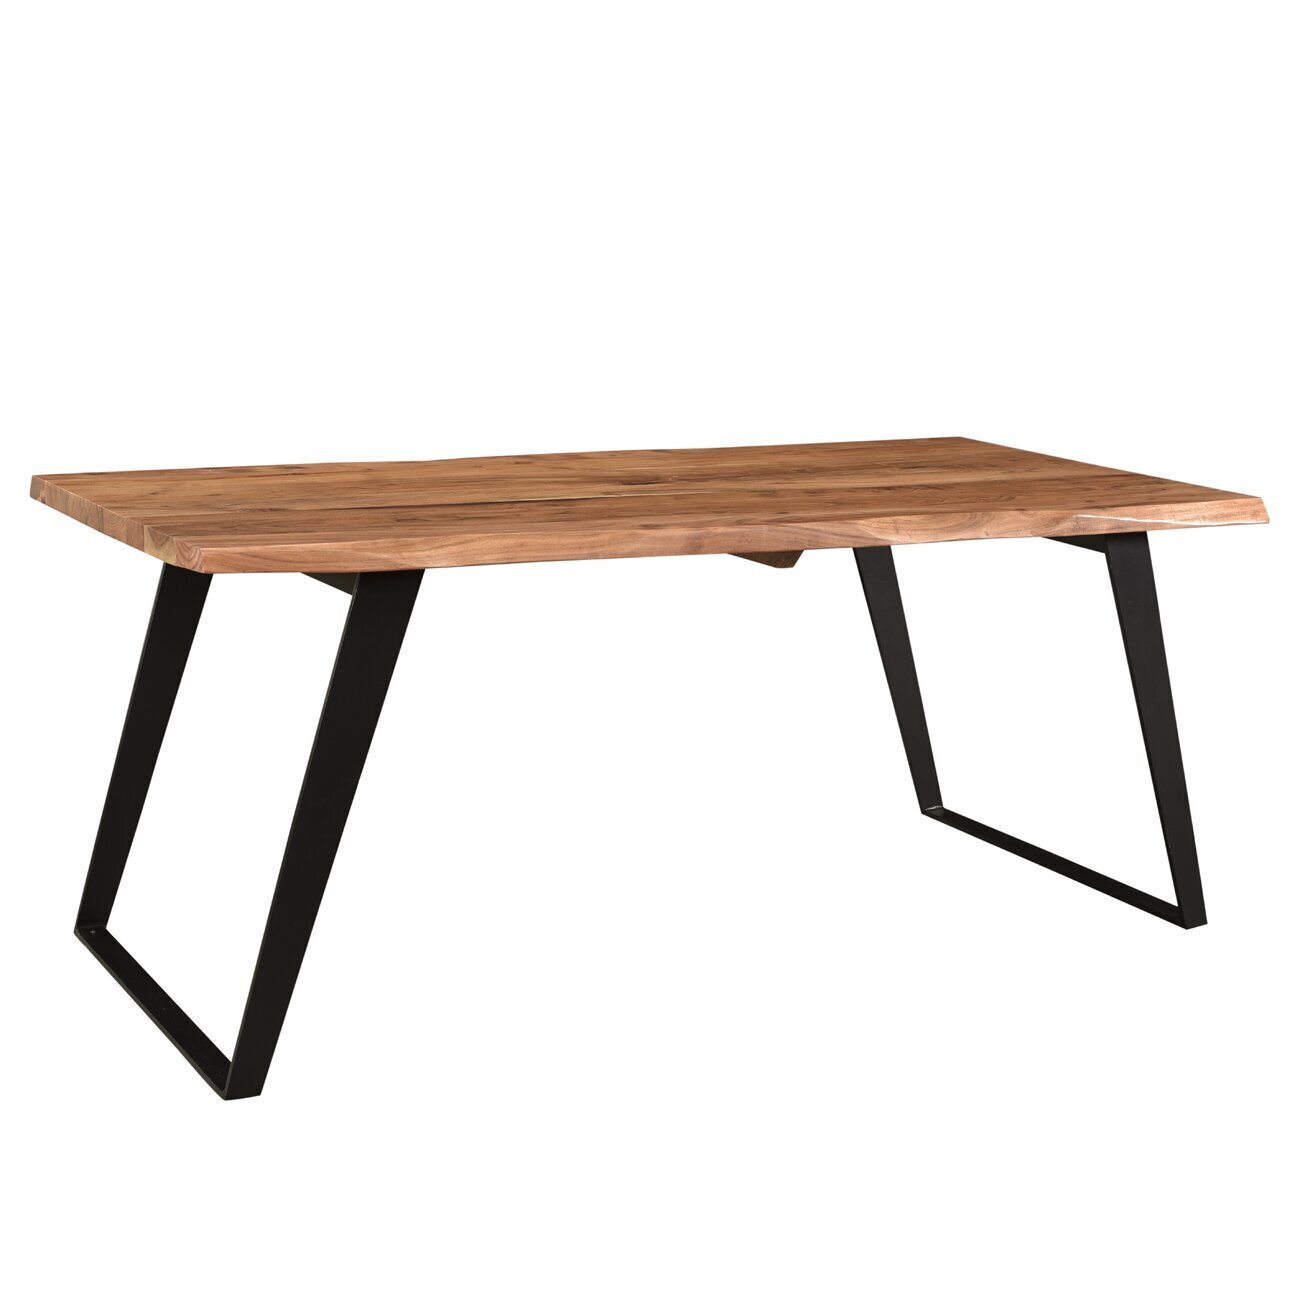 Rectangular Organic Wood and Metal Table